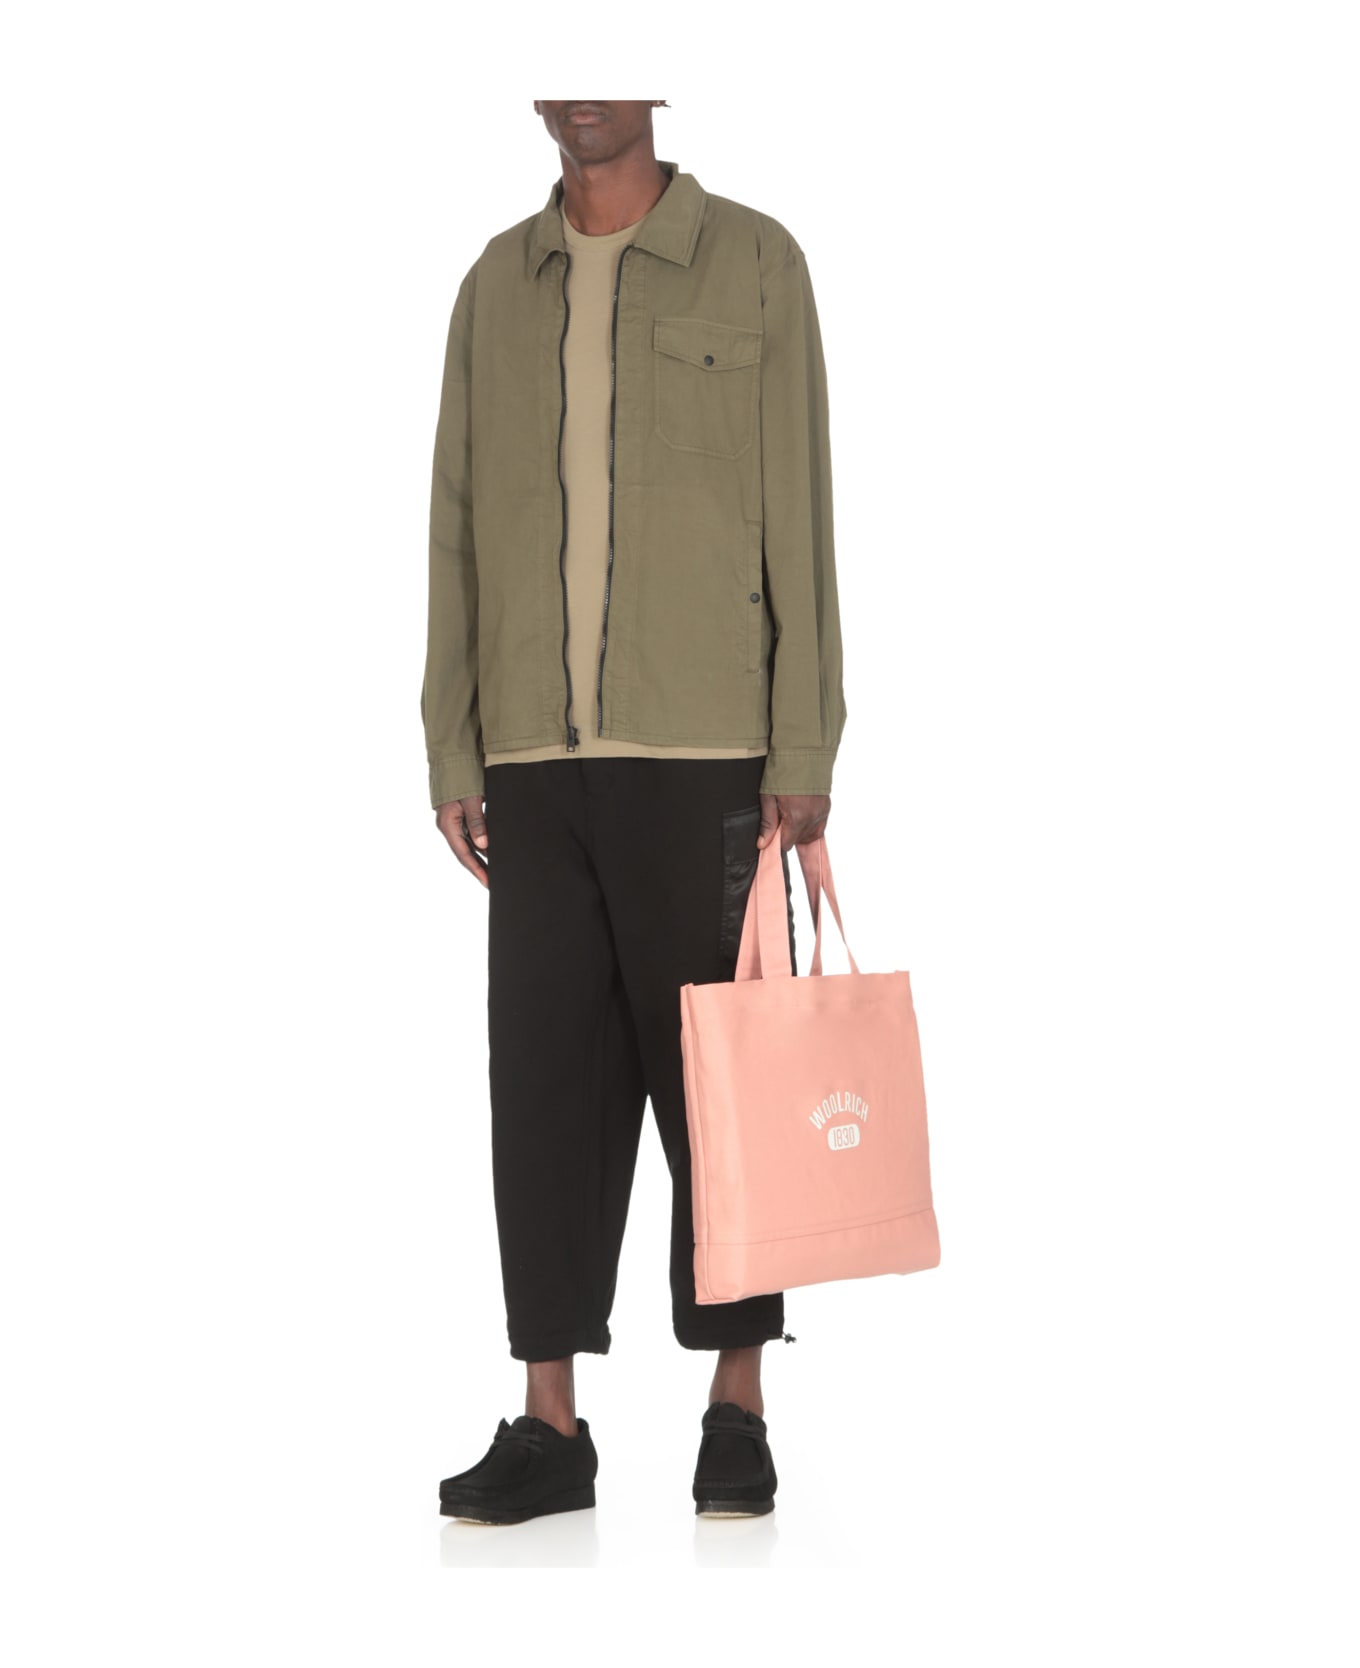 Woolrich Shopper Tote Bag - Pink